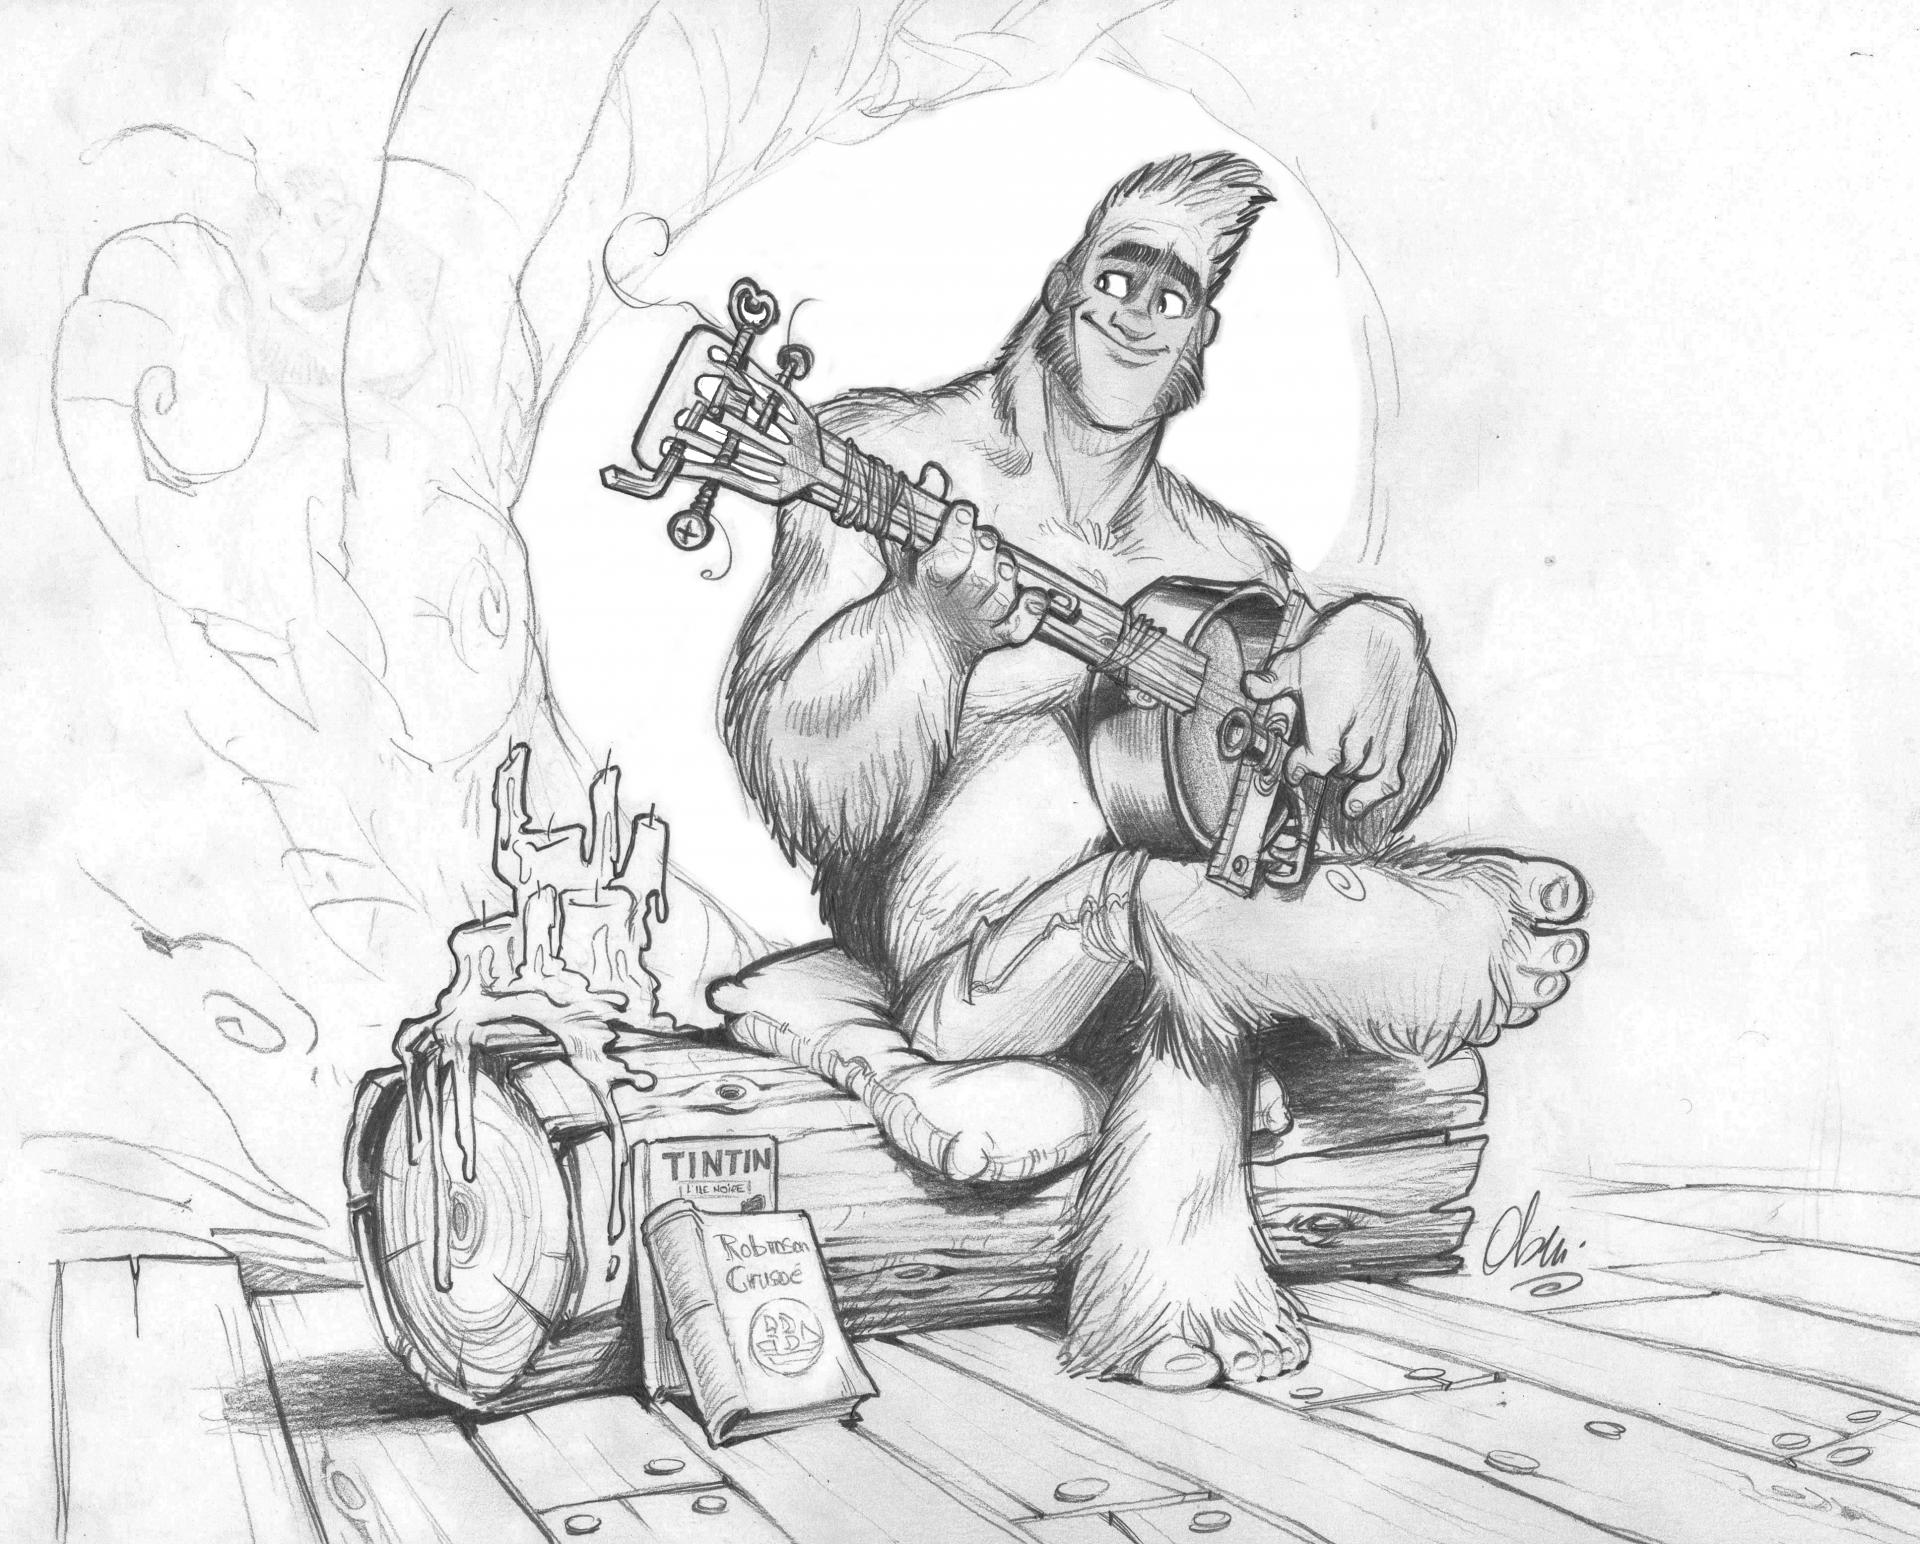 First drawing of the original Bigfoot